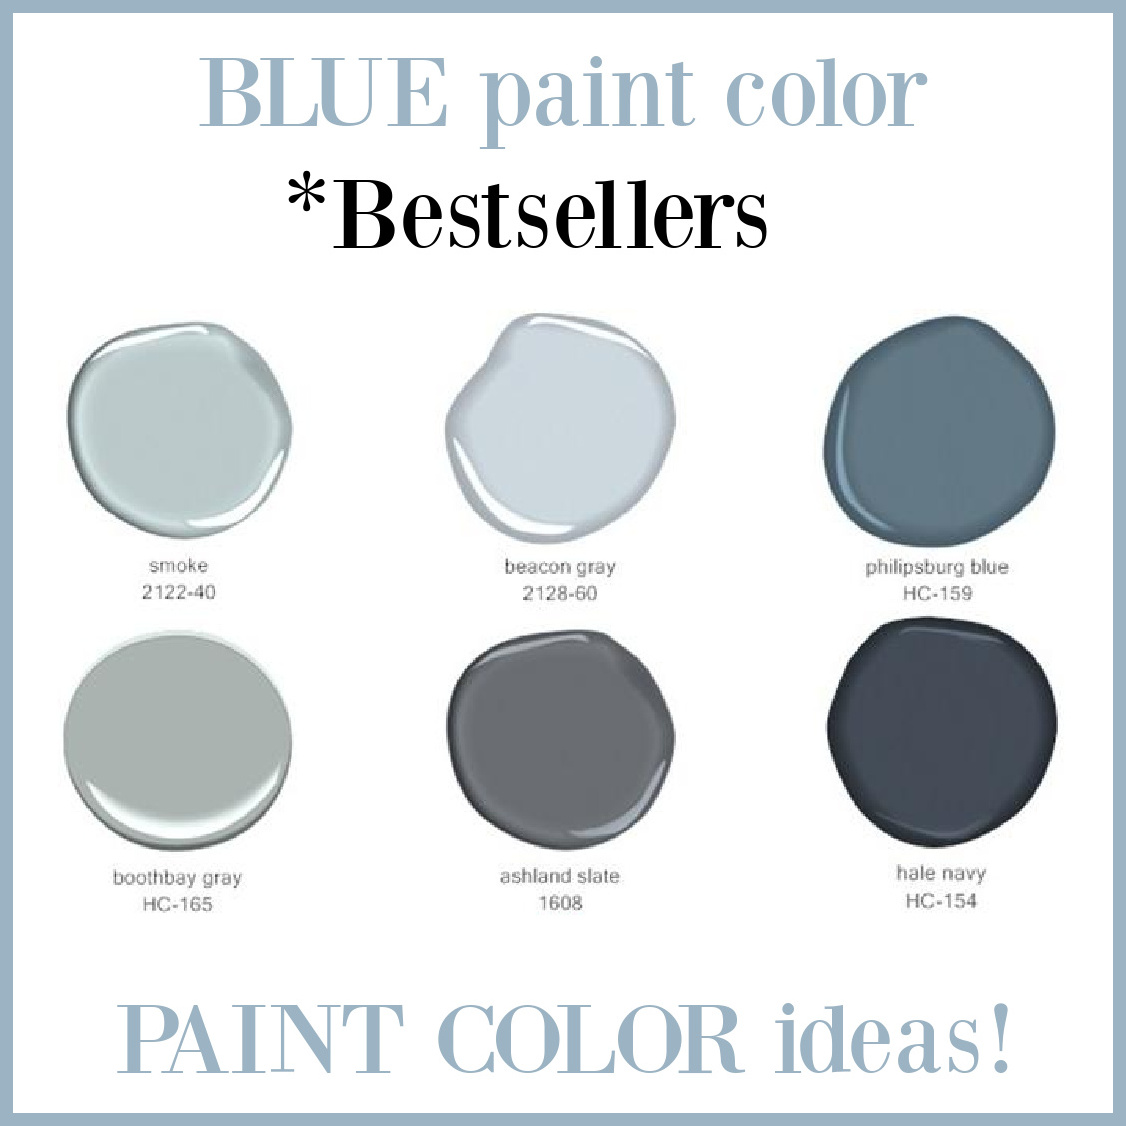 Blue paint color bestsellers from Benjamin Moore - visit Hello Lovely Studio for the details. #bluepaintcolors #bestsellingbluepaint